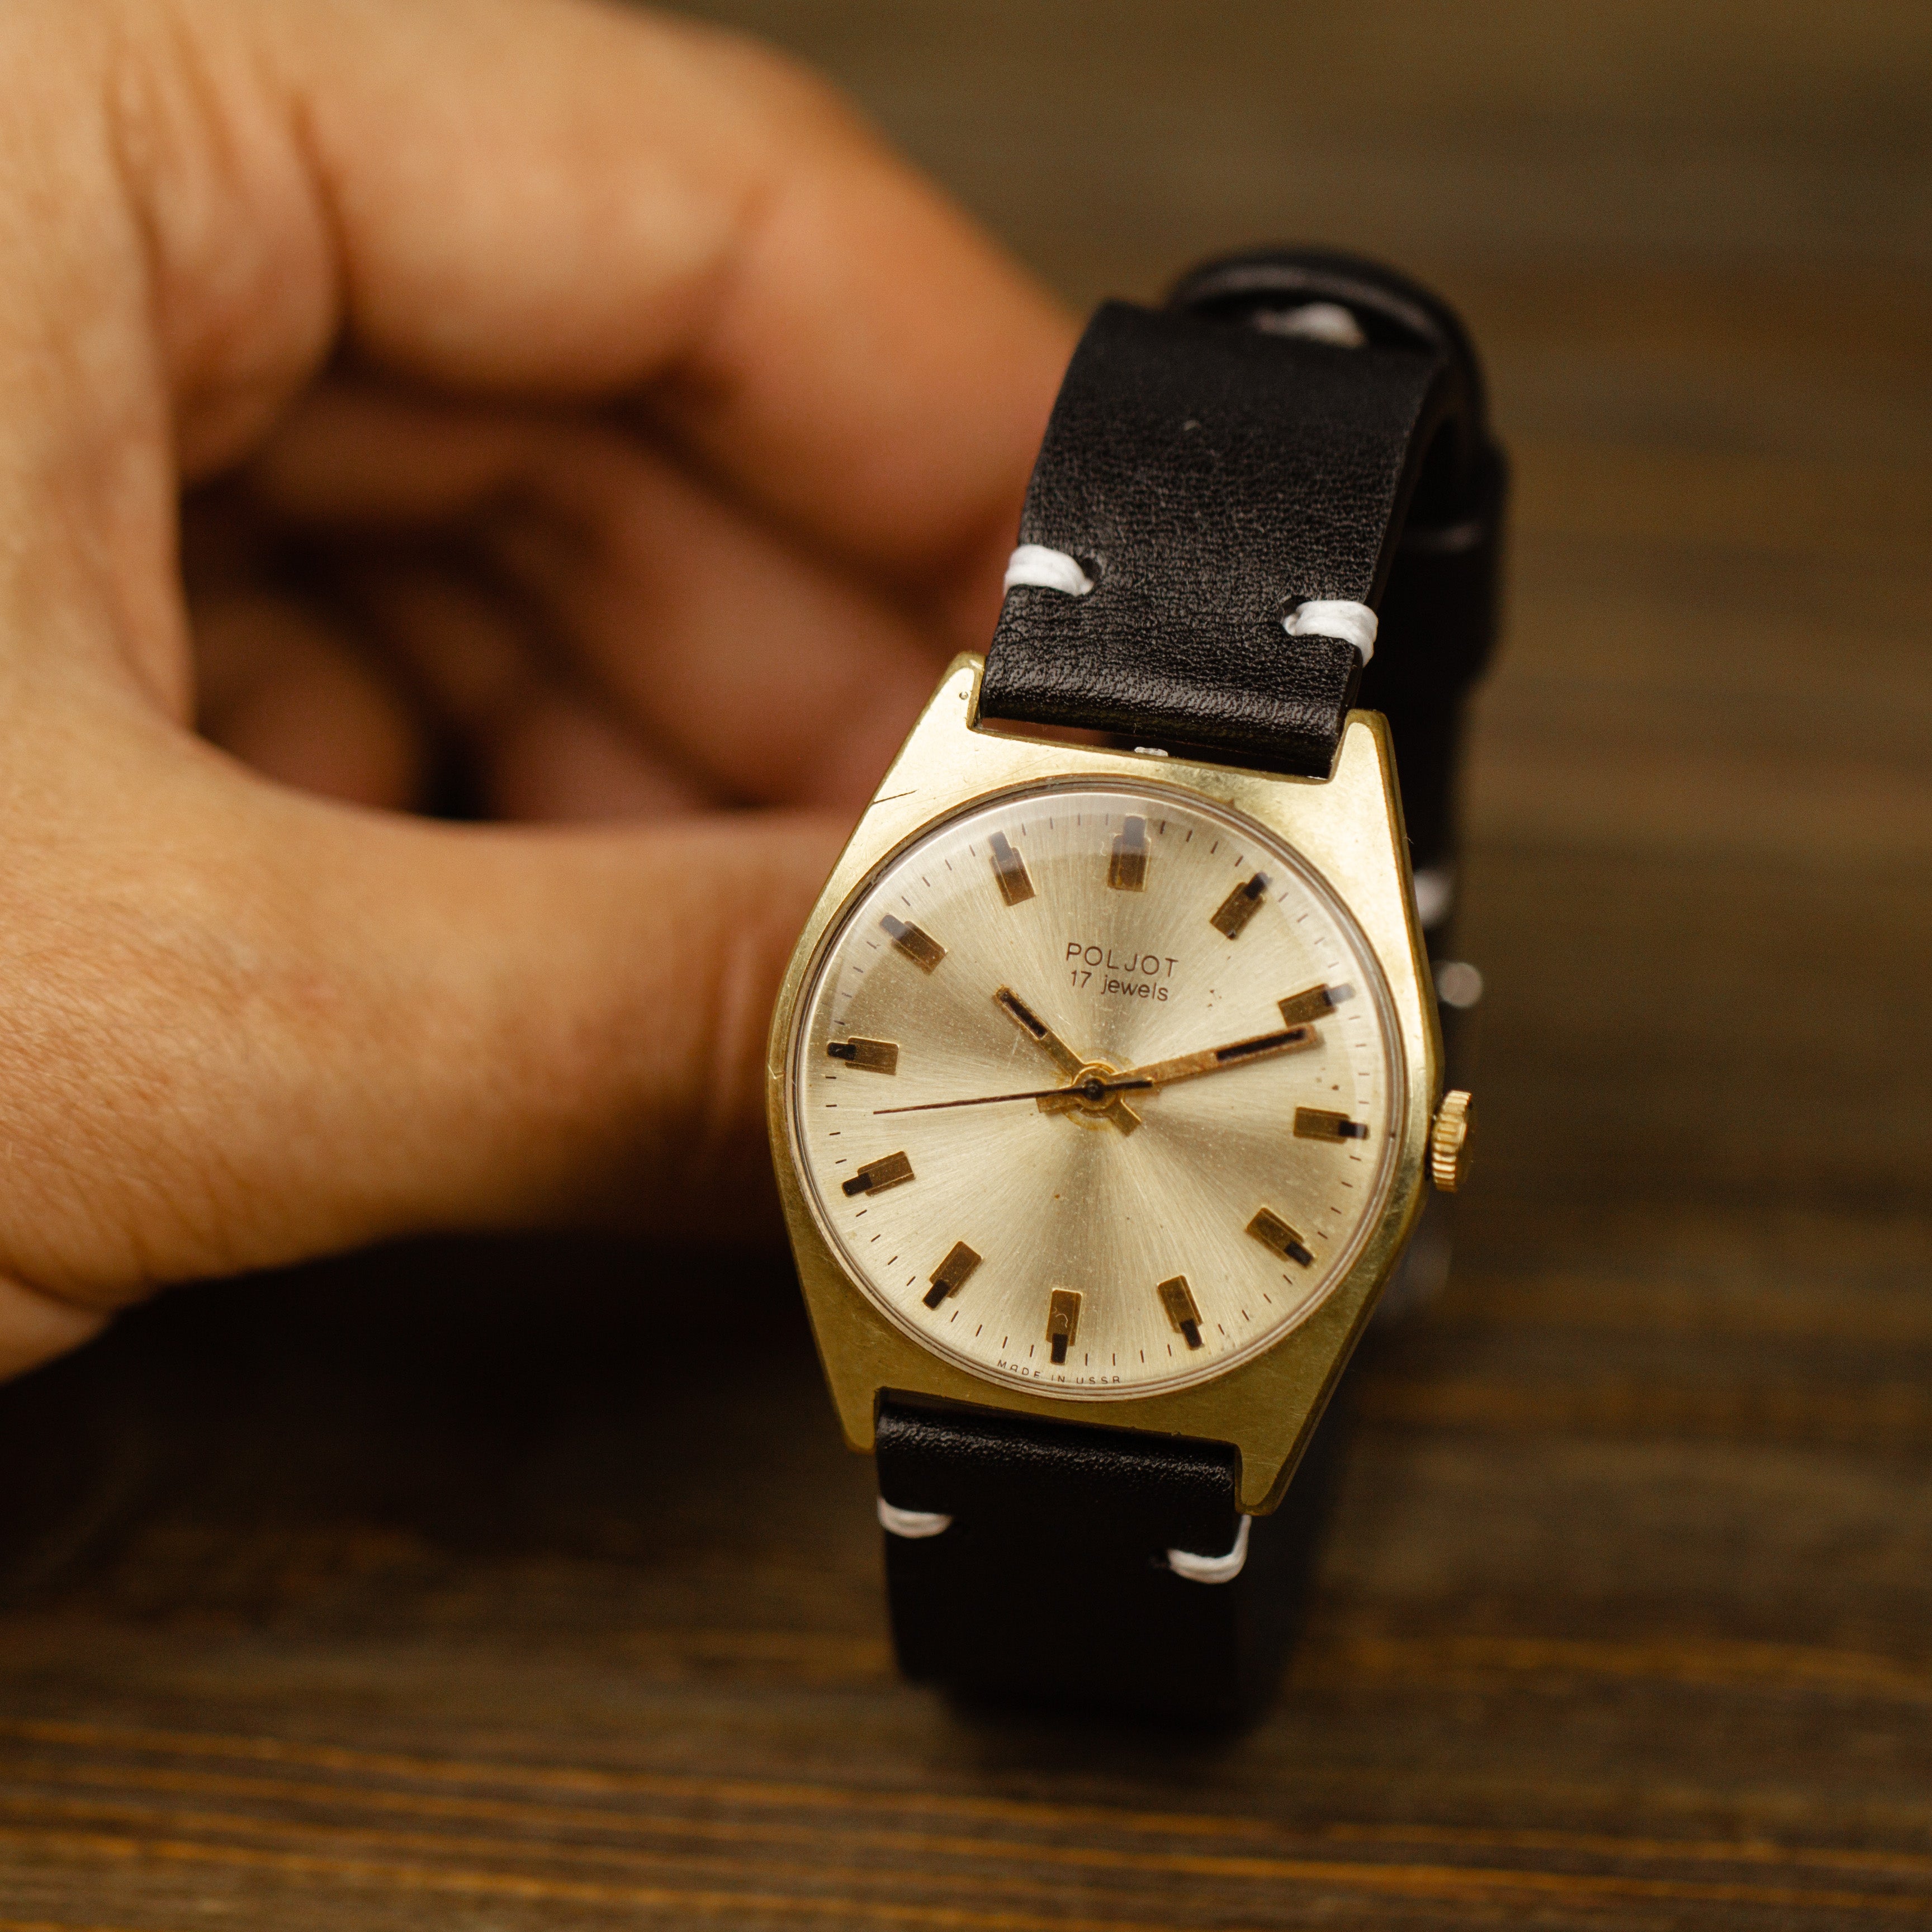 Soviet vintage rare watch for men Poljot with leather nato strap